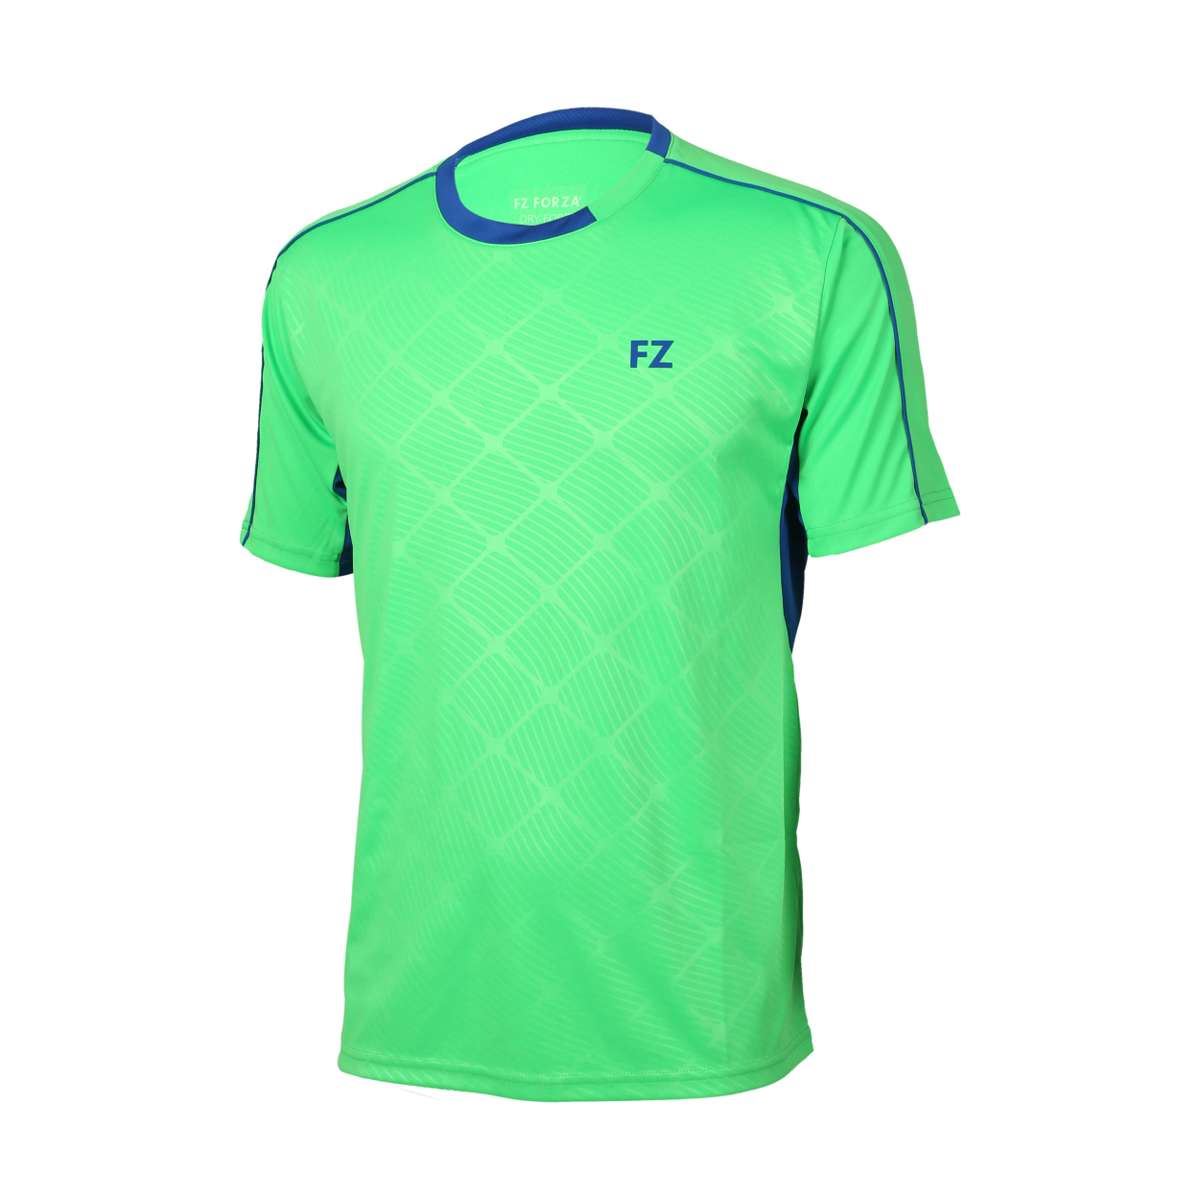 FZ Forza Barcelona Toucan Green Badminton T-Shirt